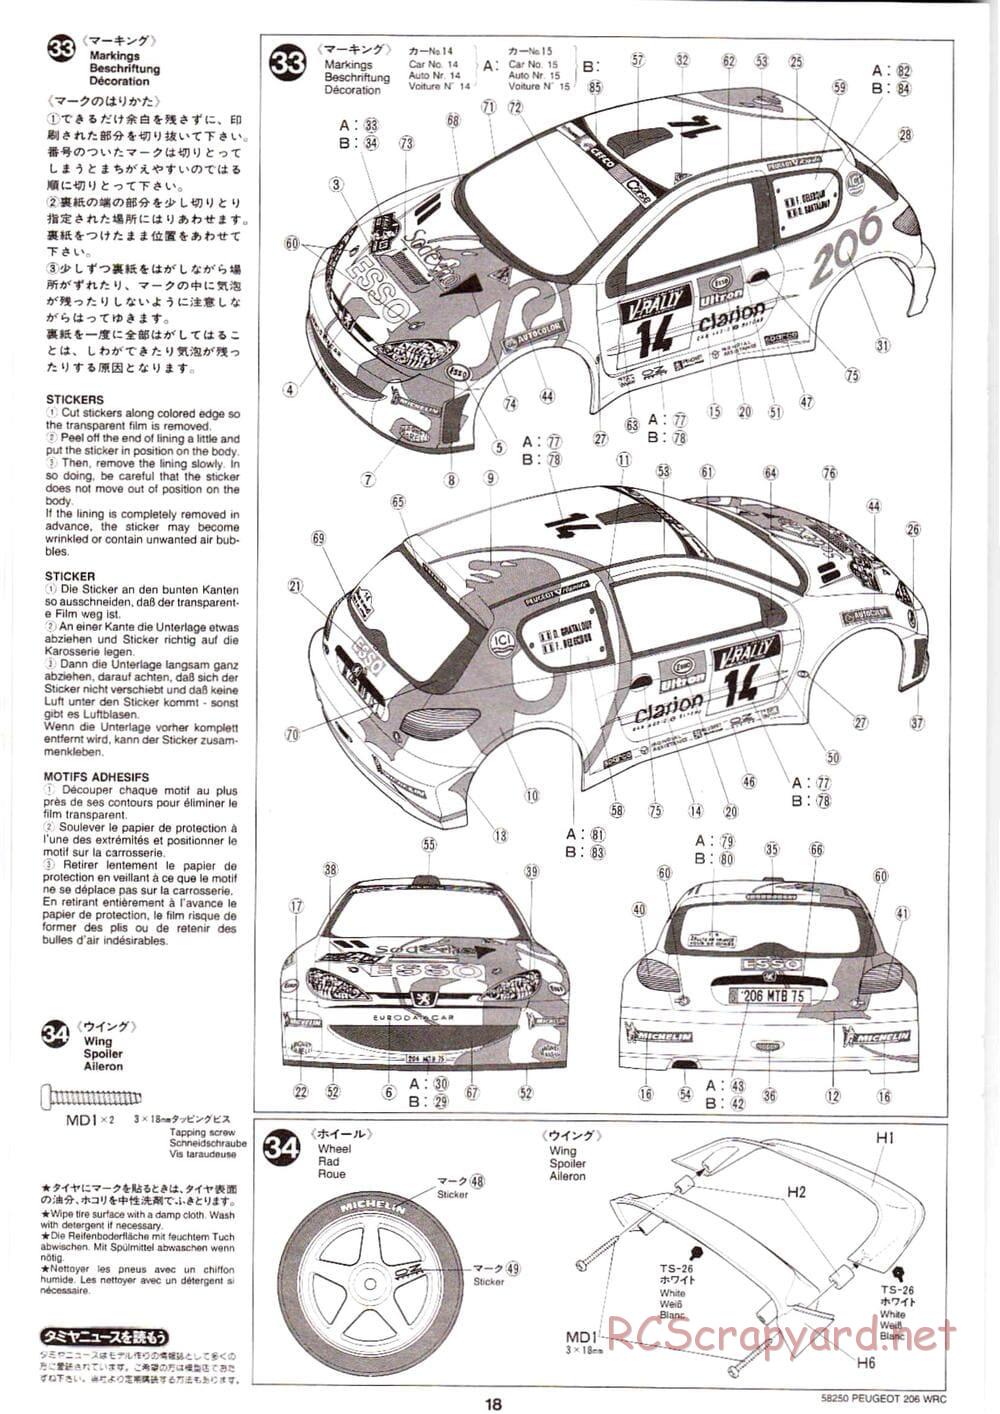 Tamiya - Peugeot 206 WRC - TA-03FS Chassis - Manual - Page 18